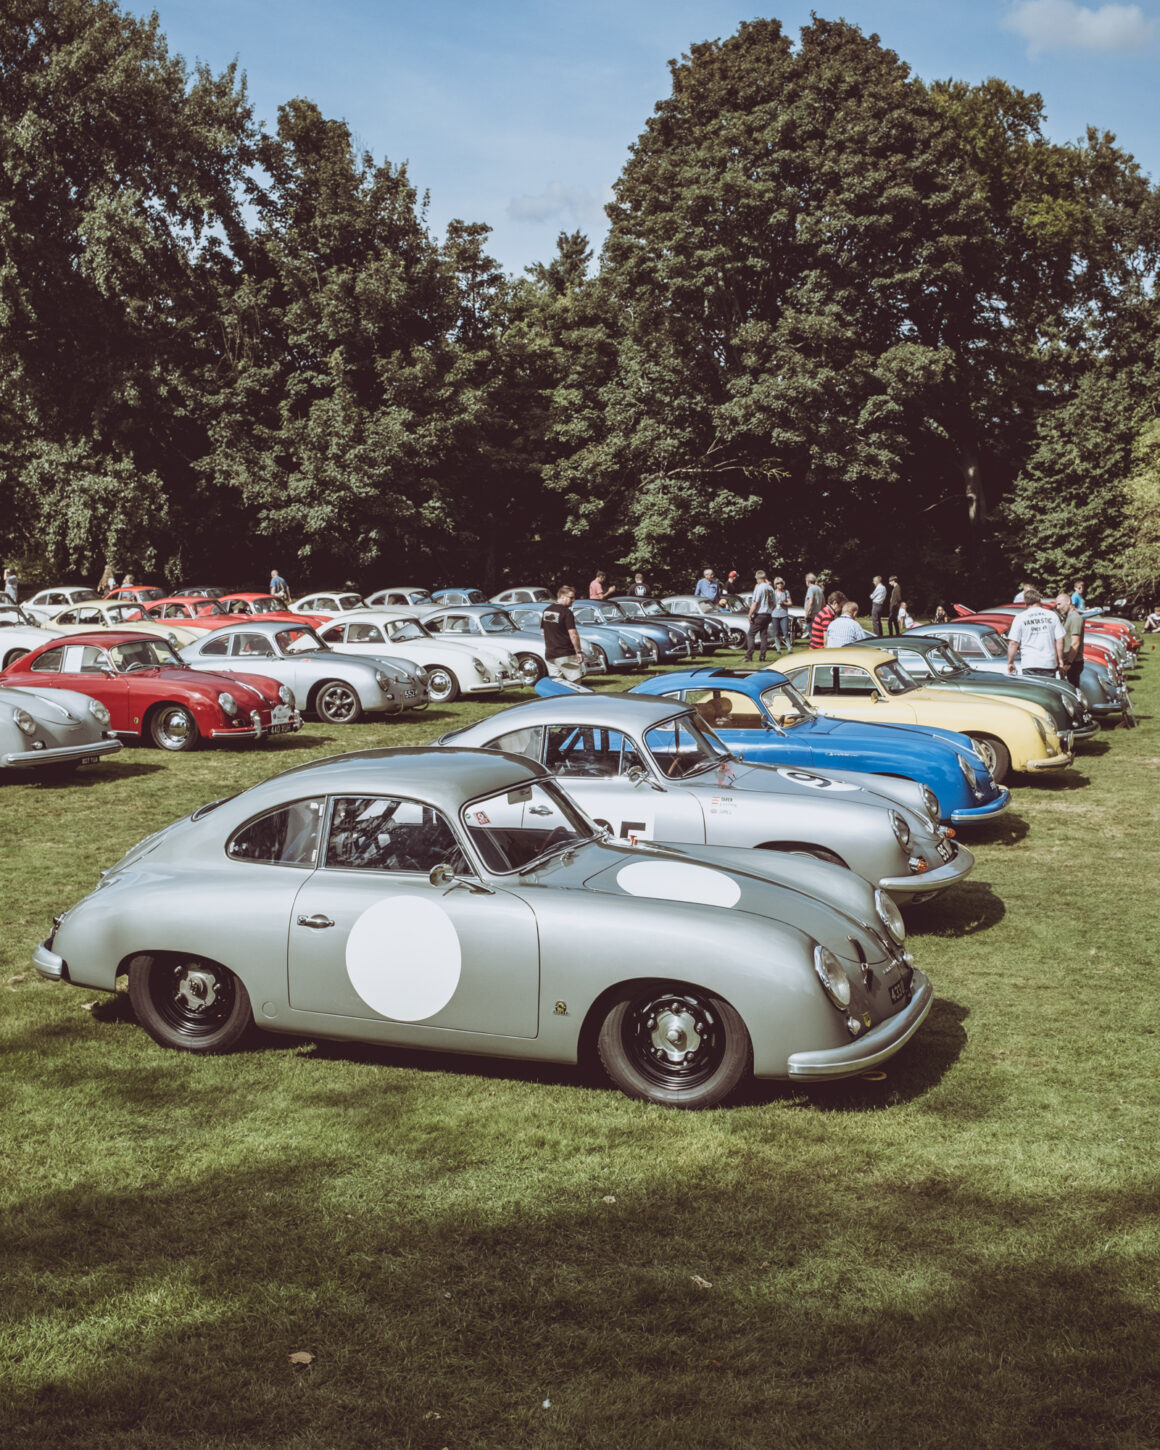 Porsche 356 display at Hedingham